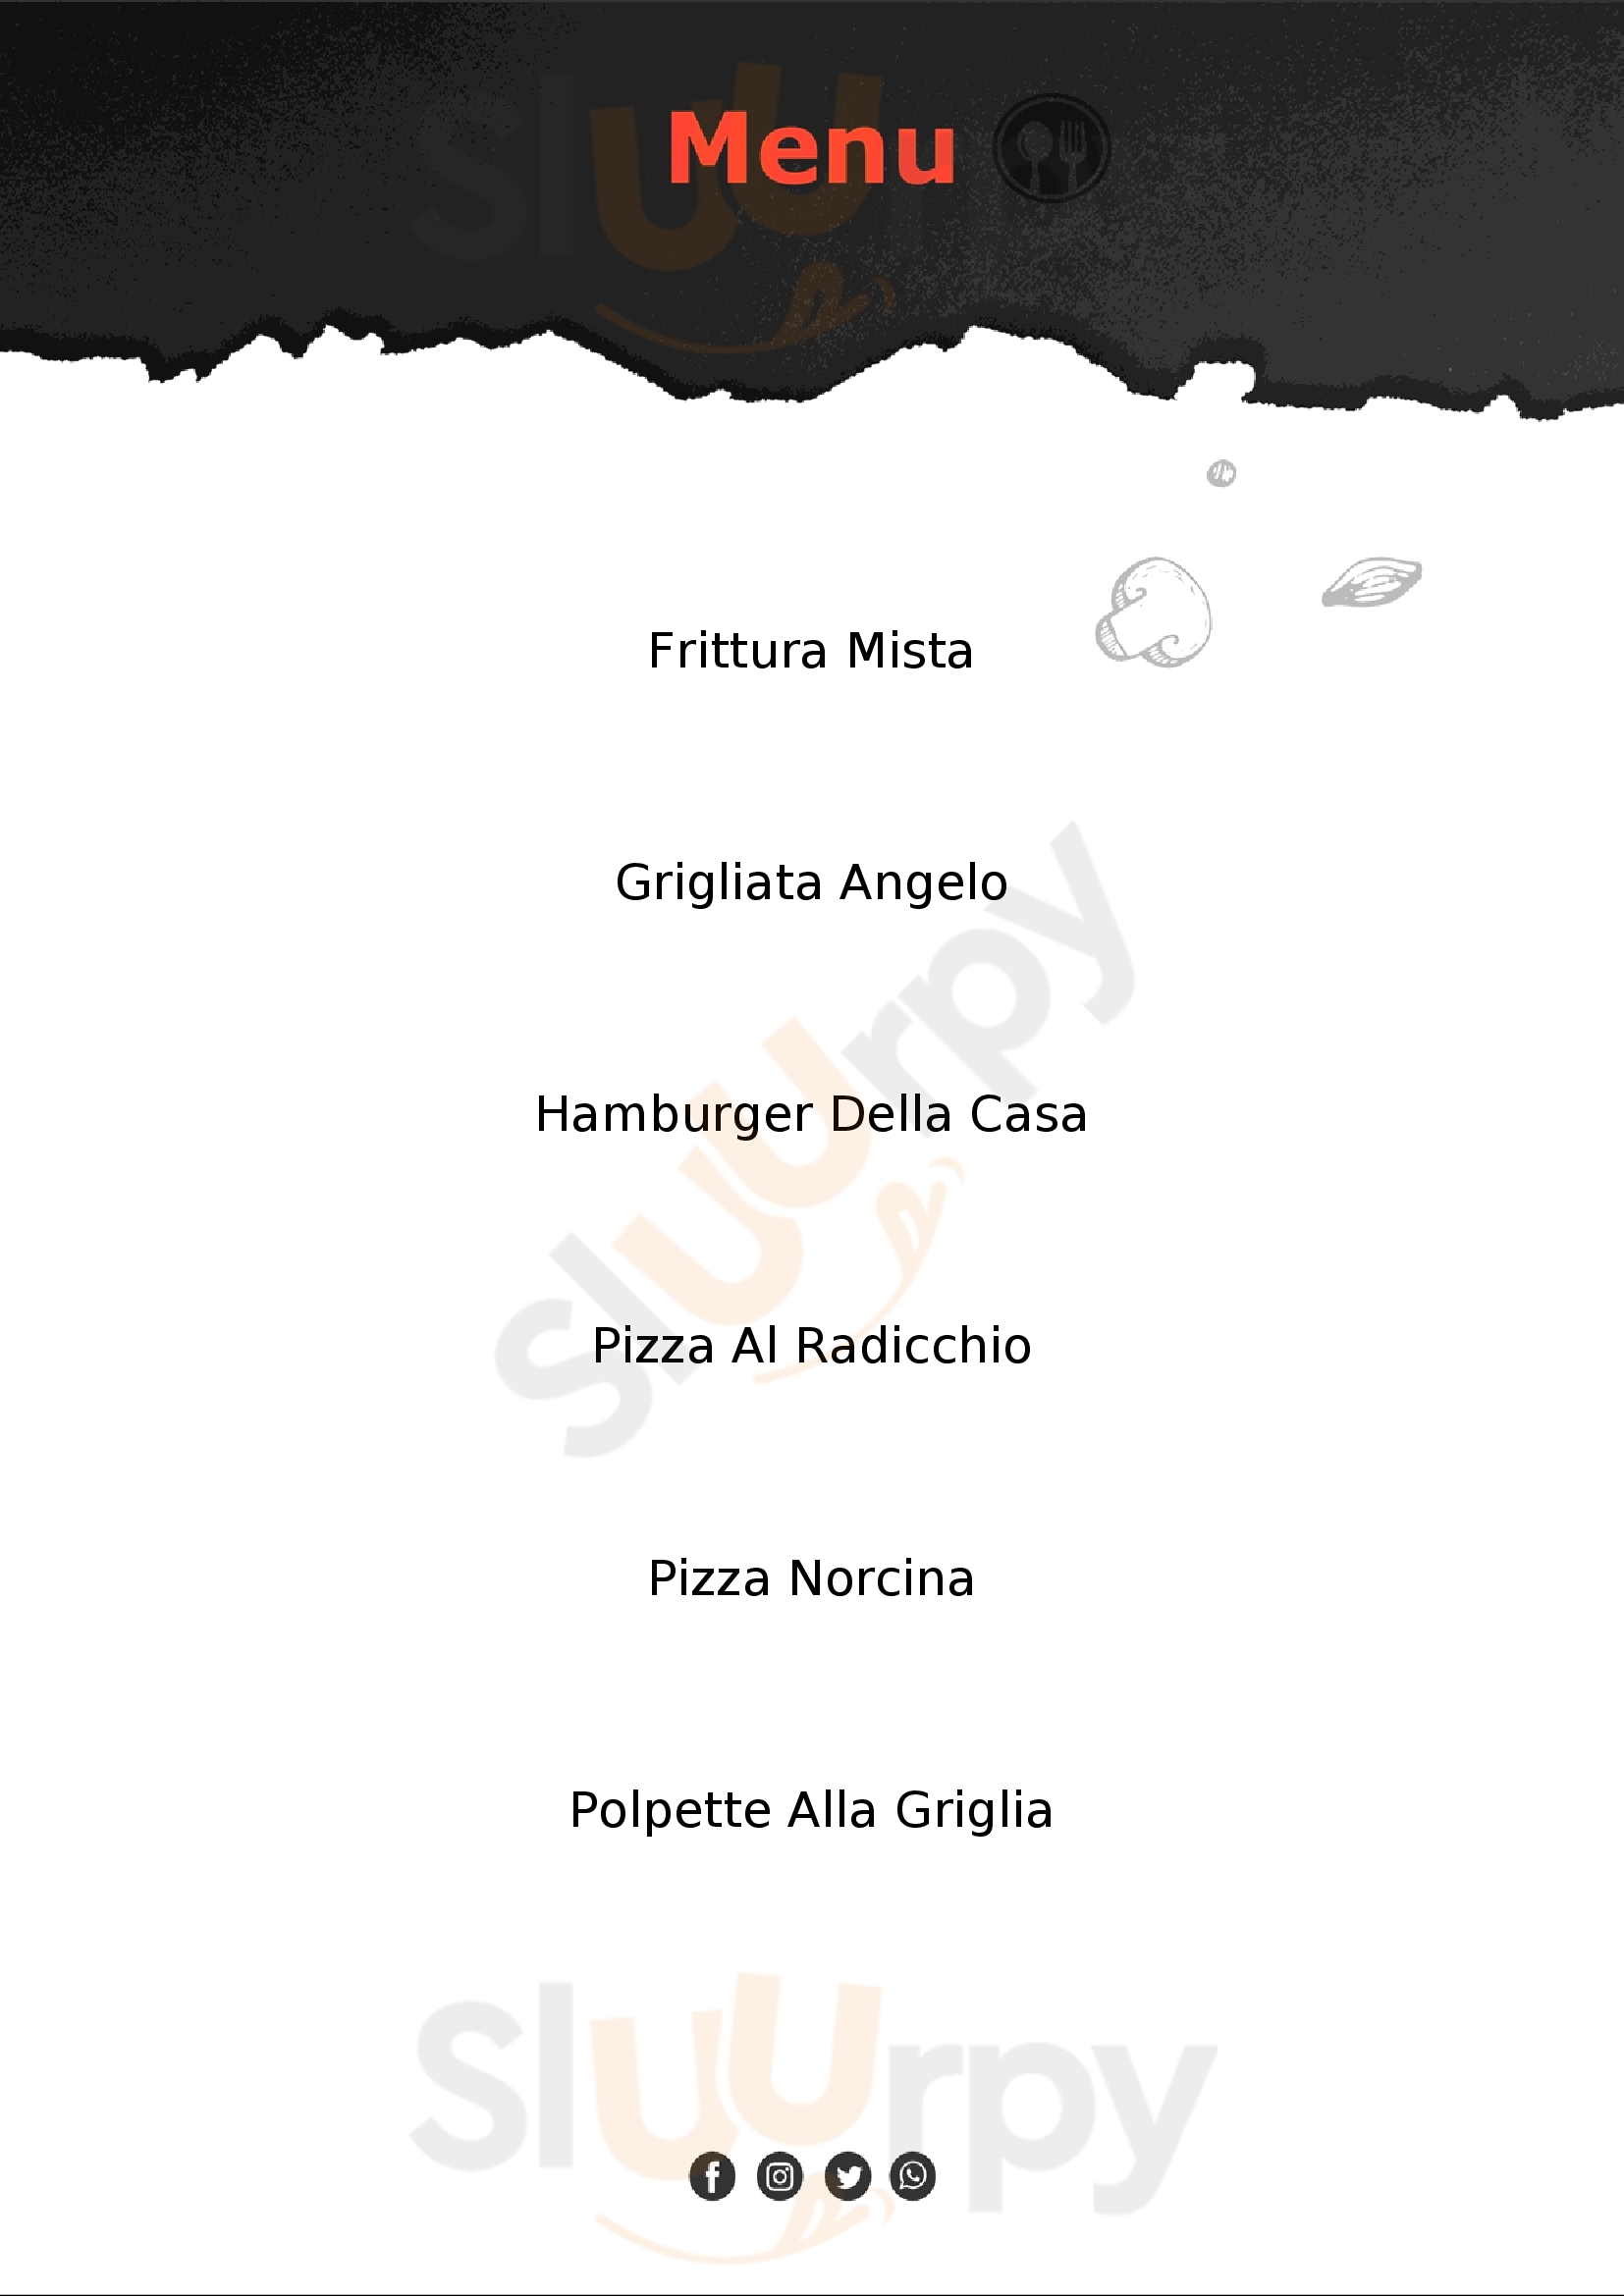 La Griglia - Braceria - Pizzeria Brindisi menù 1 pagina